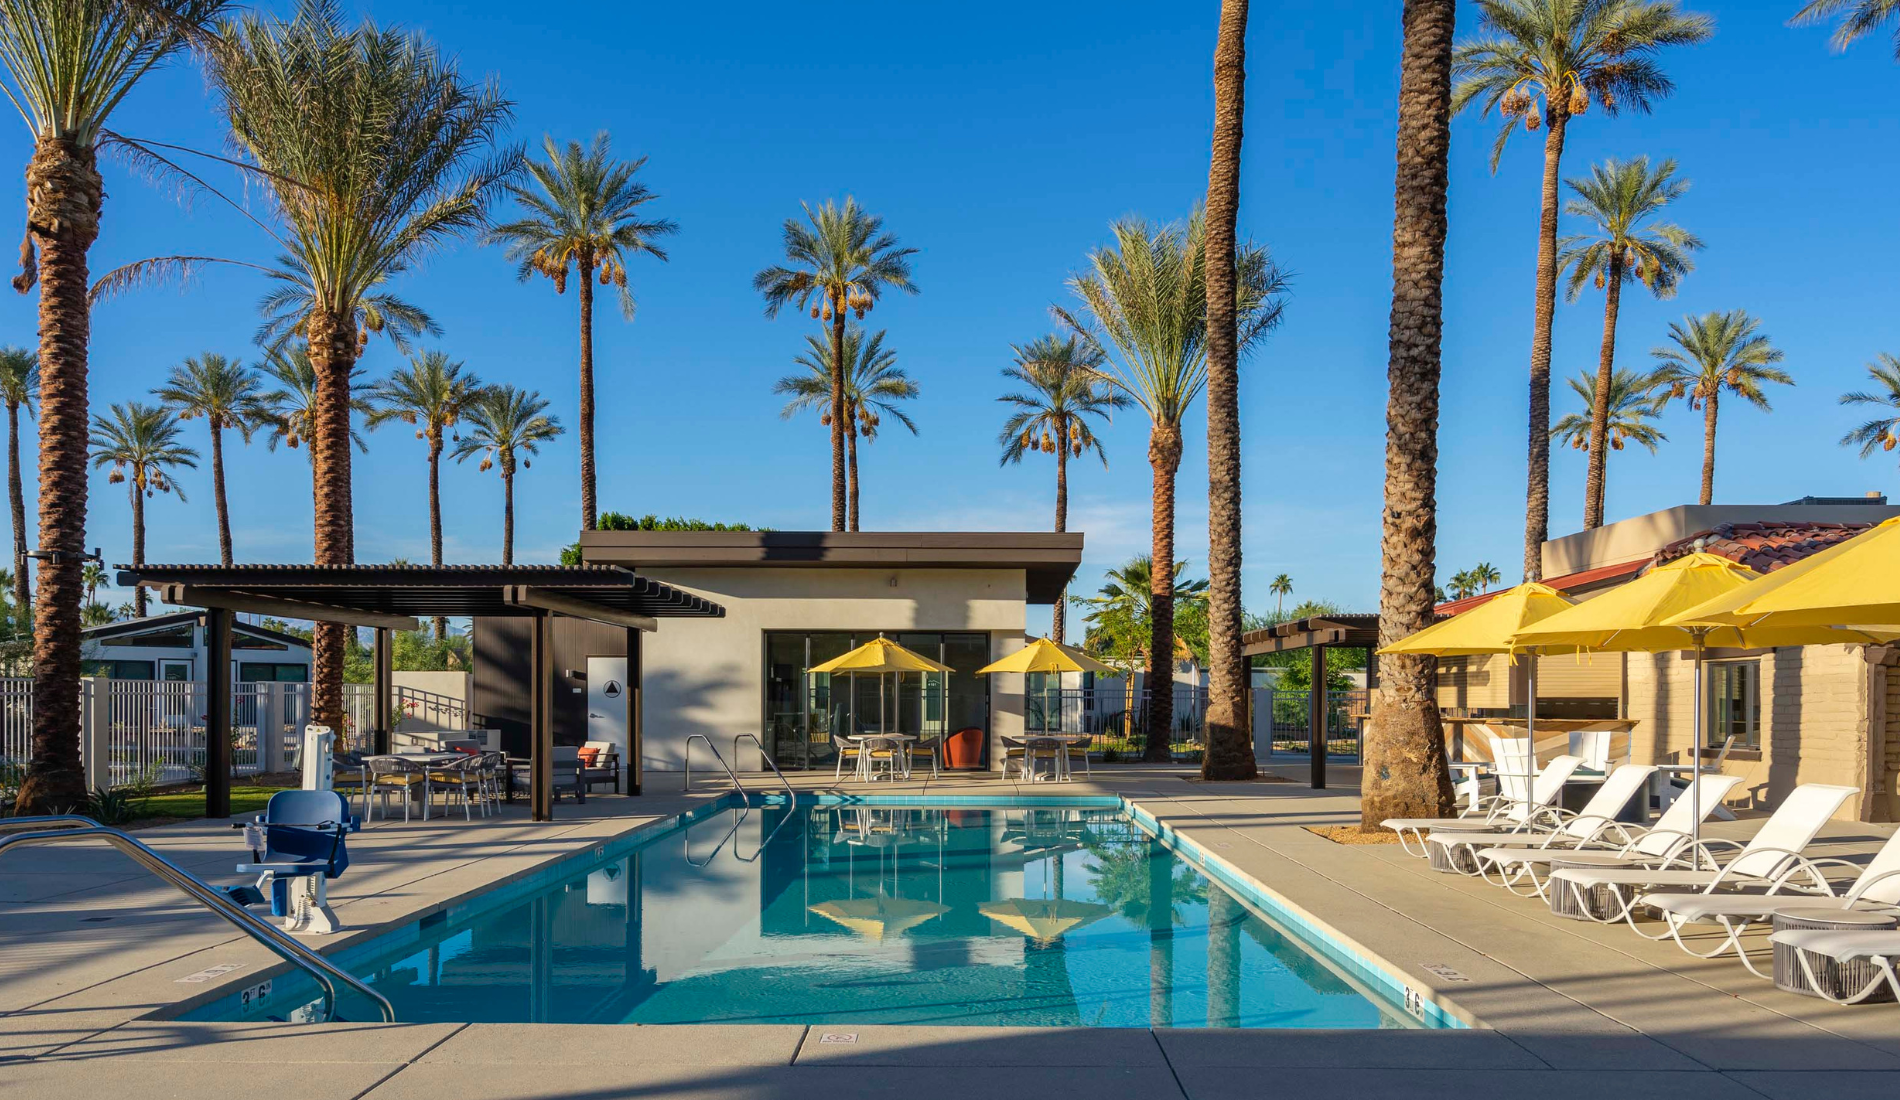 Palm Springs resort design, exterior, palm trees, pool, building